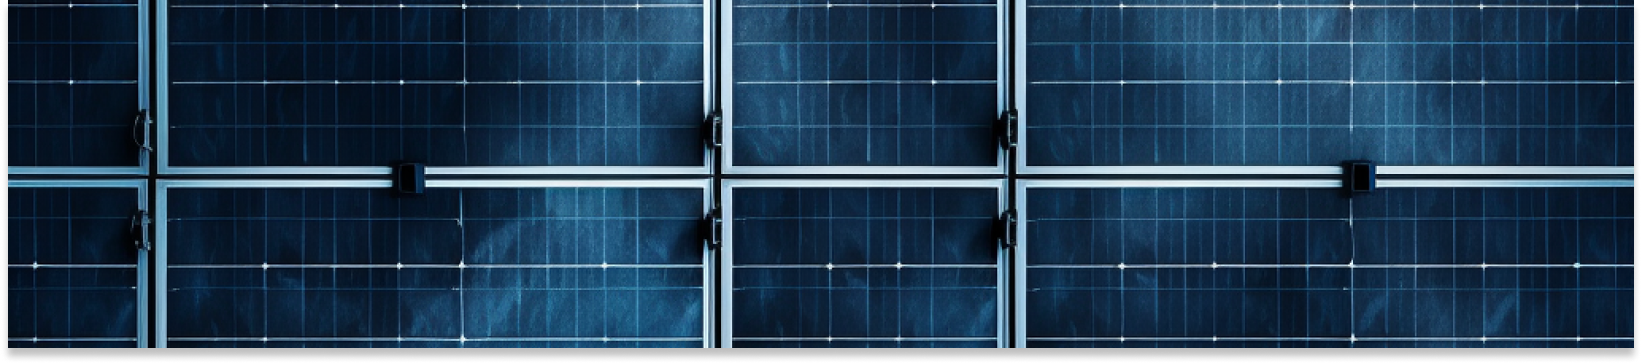 slider pannelli fotovoltaici